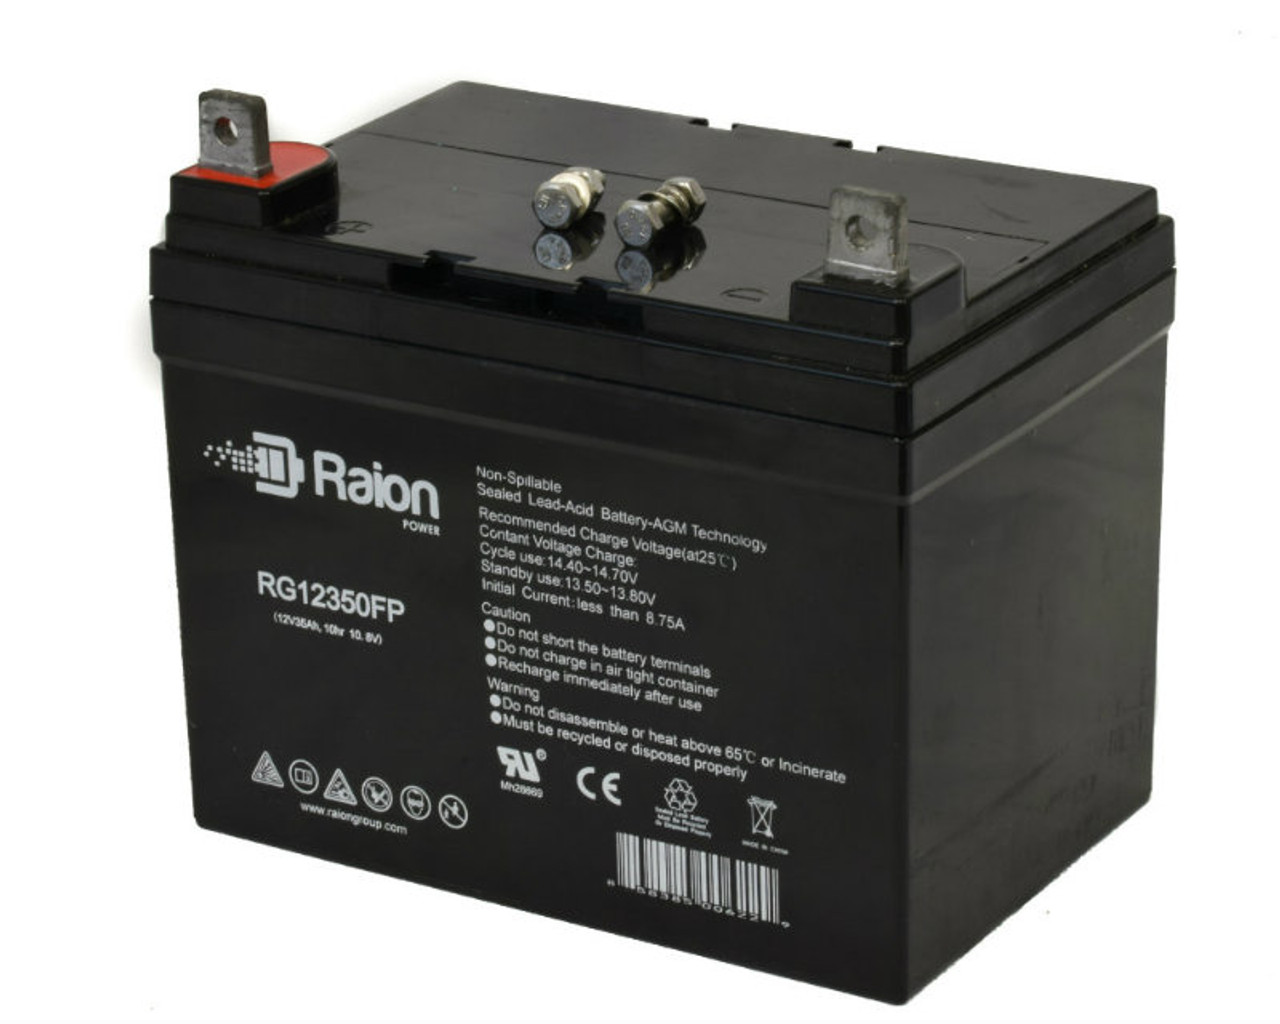 Raion Power Replacement 12V 35Ah RG12350FP Battery for Spirit 1850H